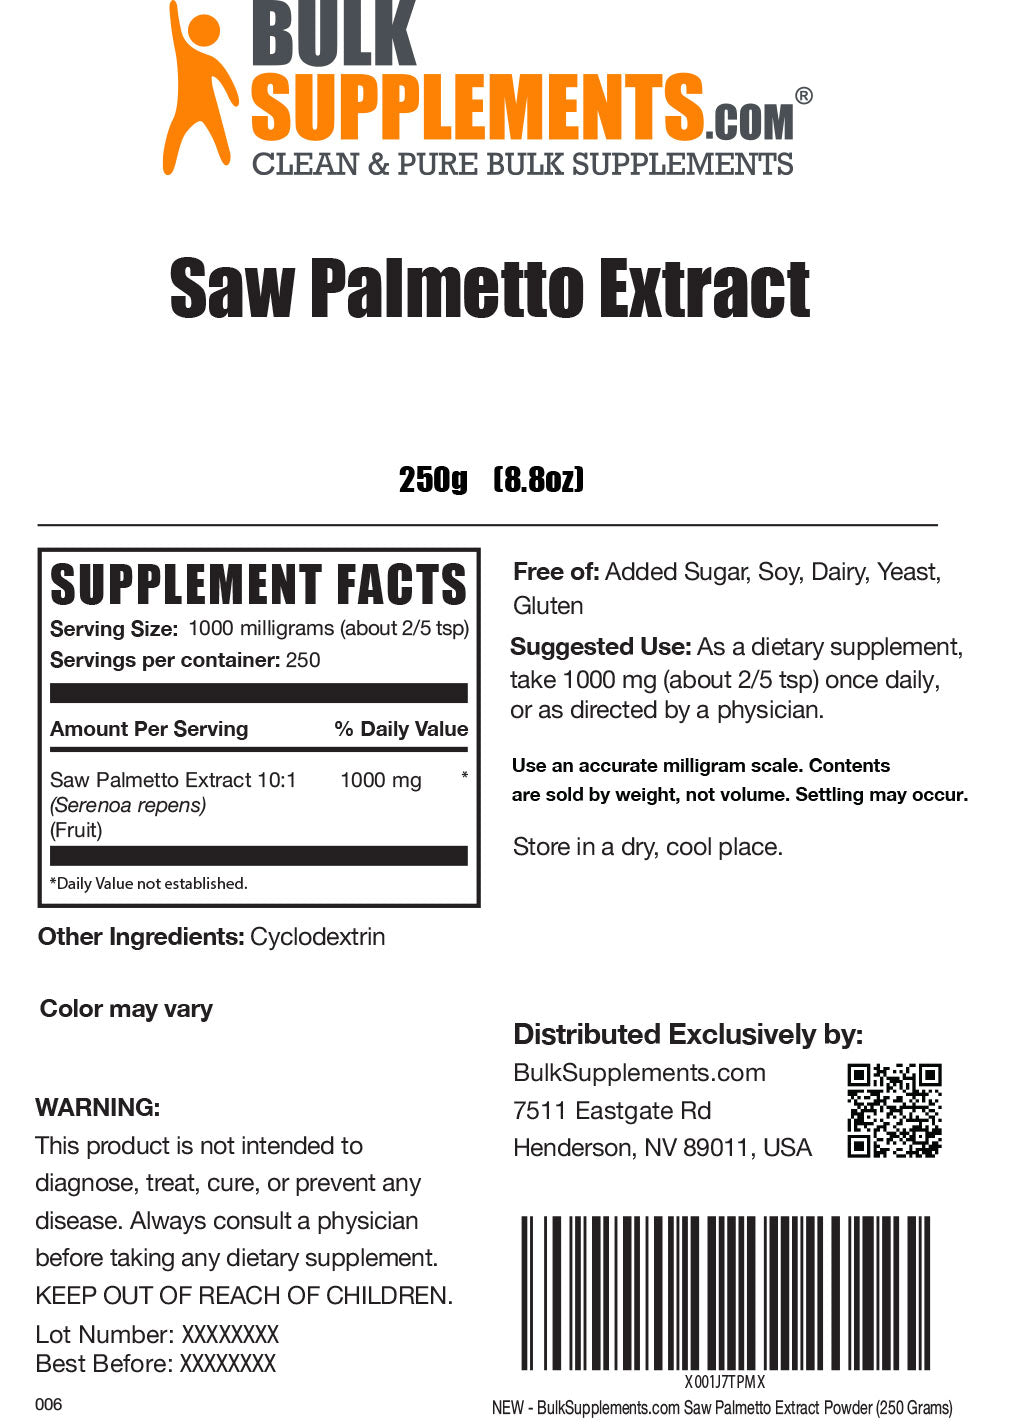 Saw Palmetto Extract powder label 250g